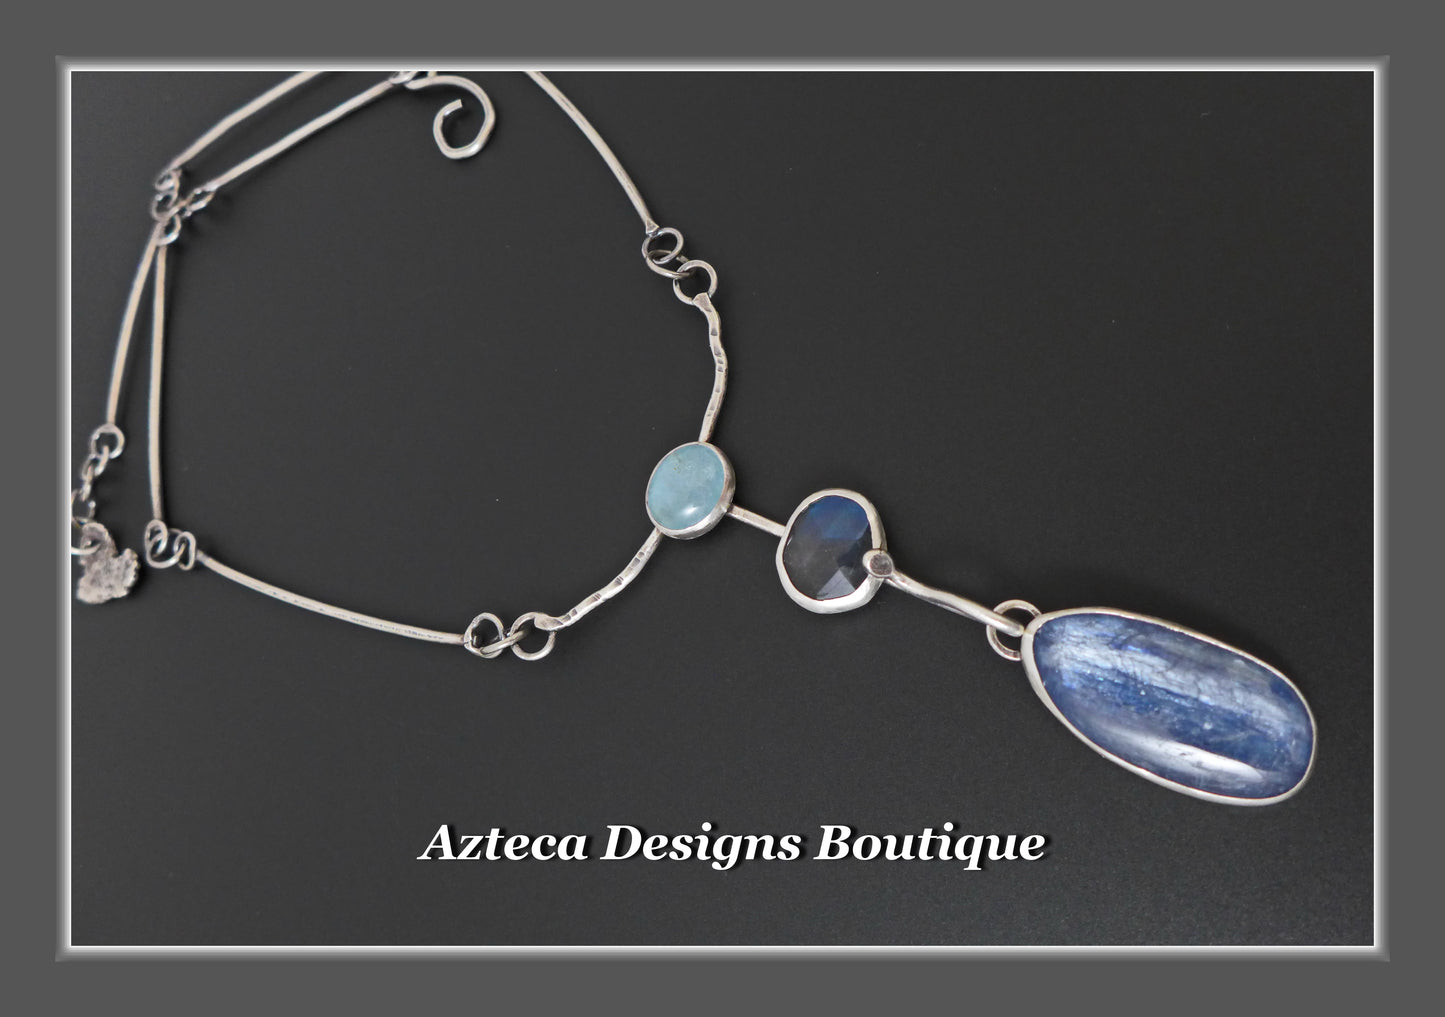 Aquamarine + Labradorite + Kyanite + Argentium Silver + Hand Fabricated Necklace